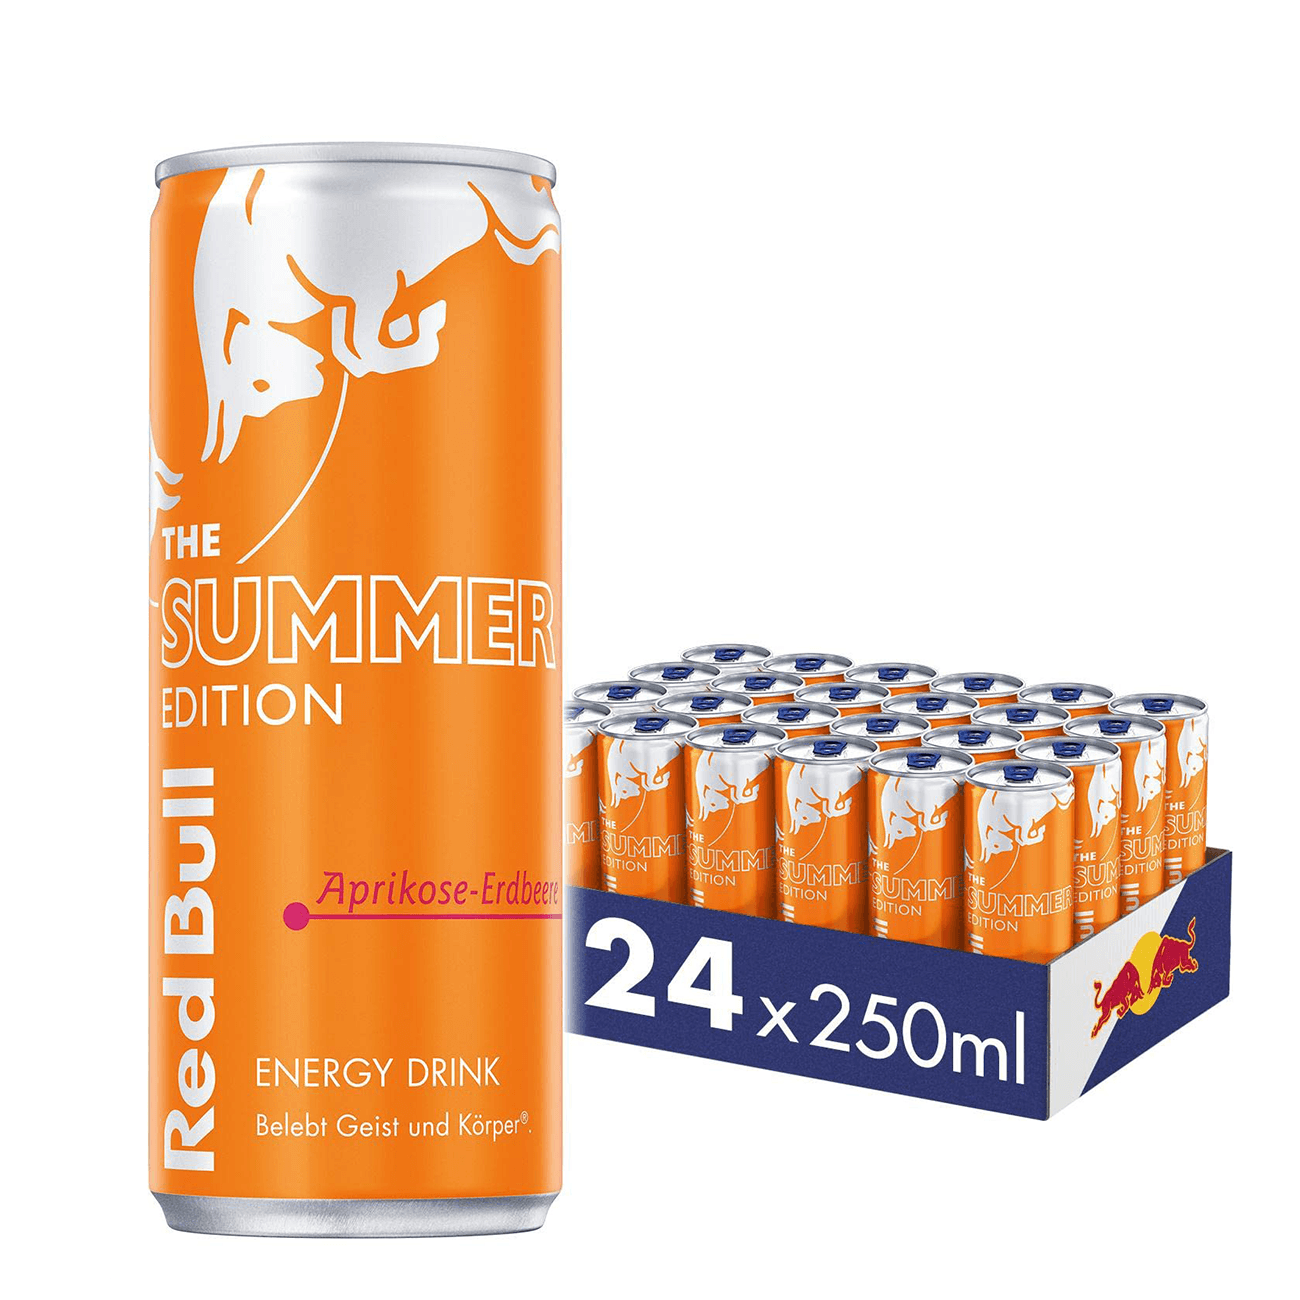 Red Bull Summer Edition, Energy Drink, AprikoseErdbeere, 250ml, 24